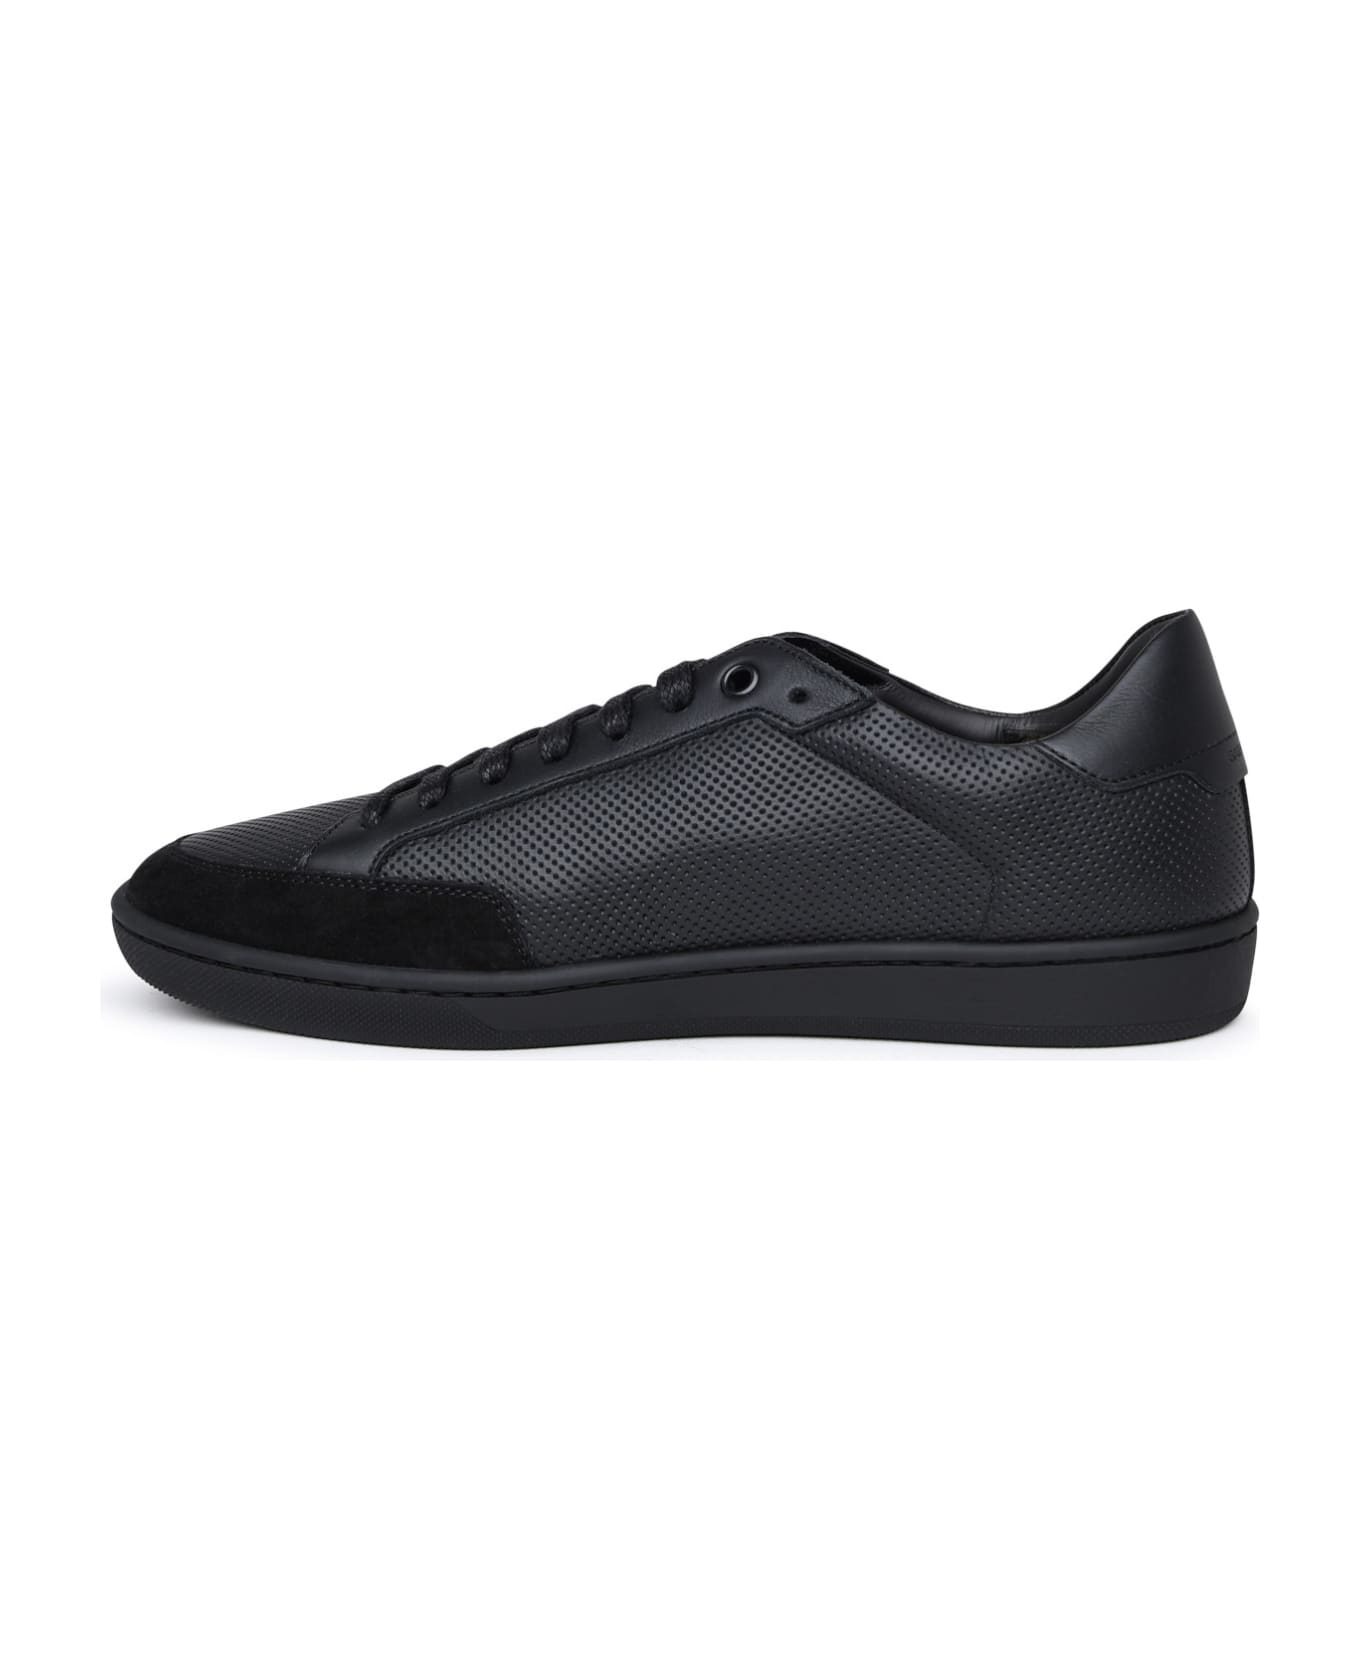 Saint Laurent Court Sneakers In Black Leather - Black